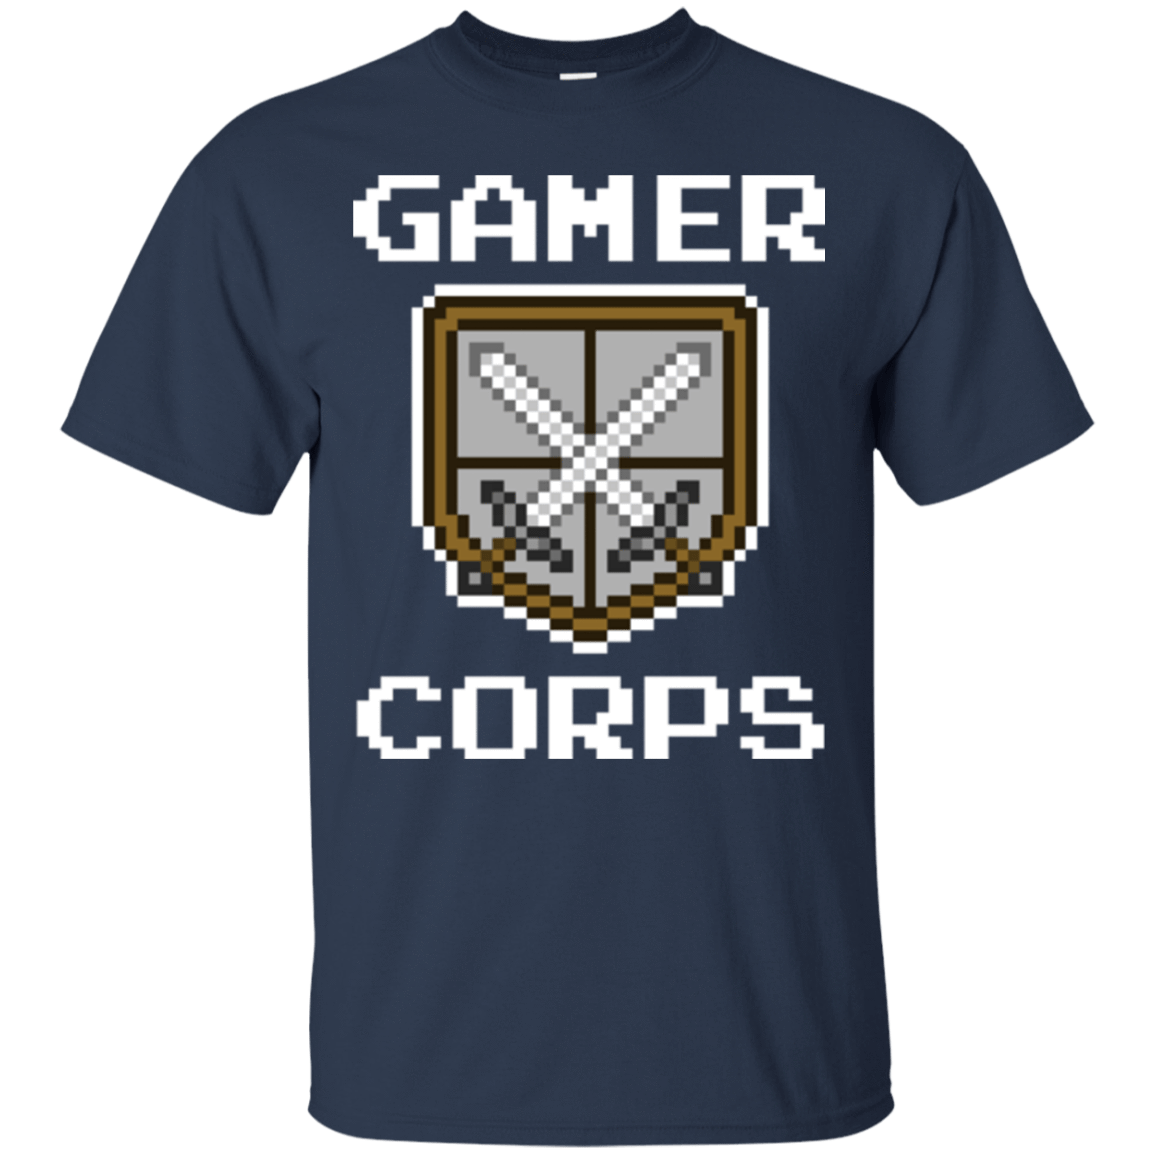 T-Shirts Navy / Small Gamer corps T-Shirt